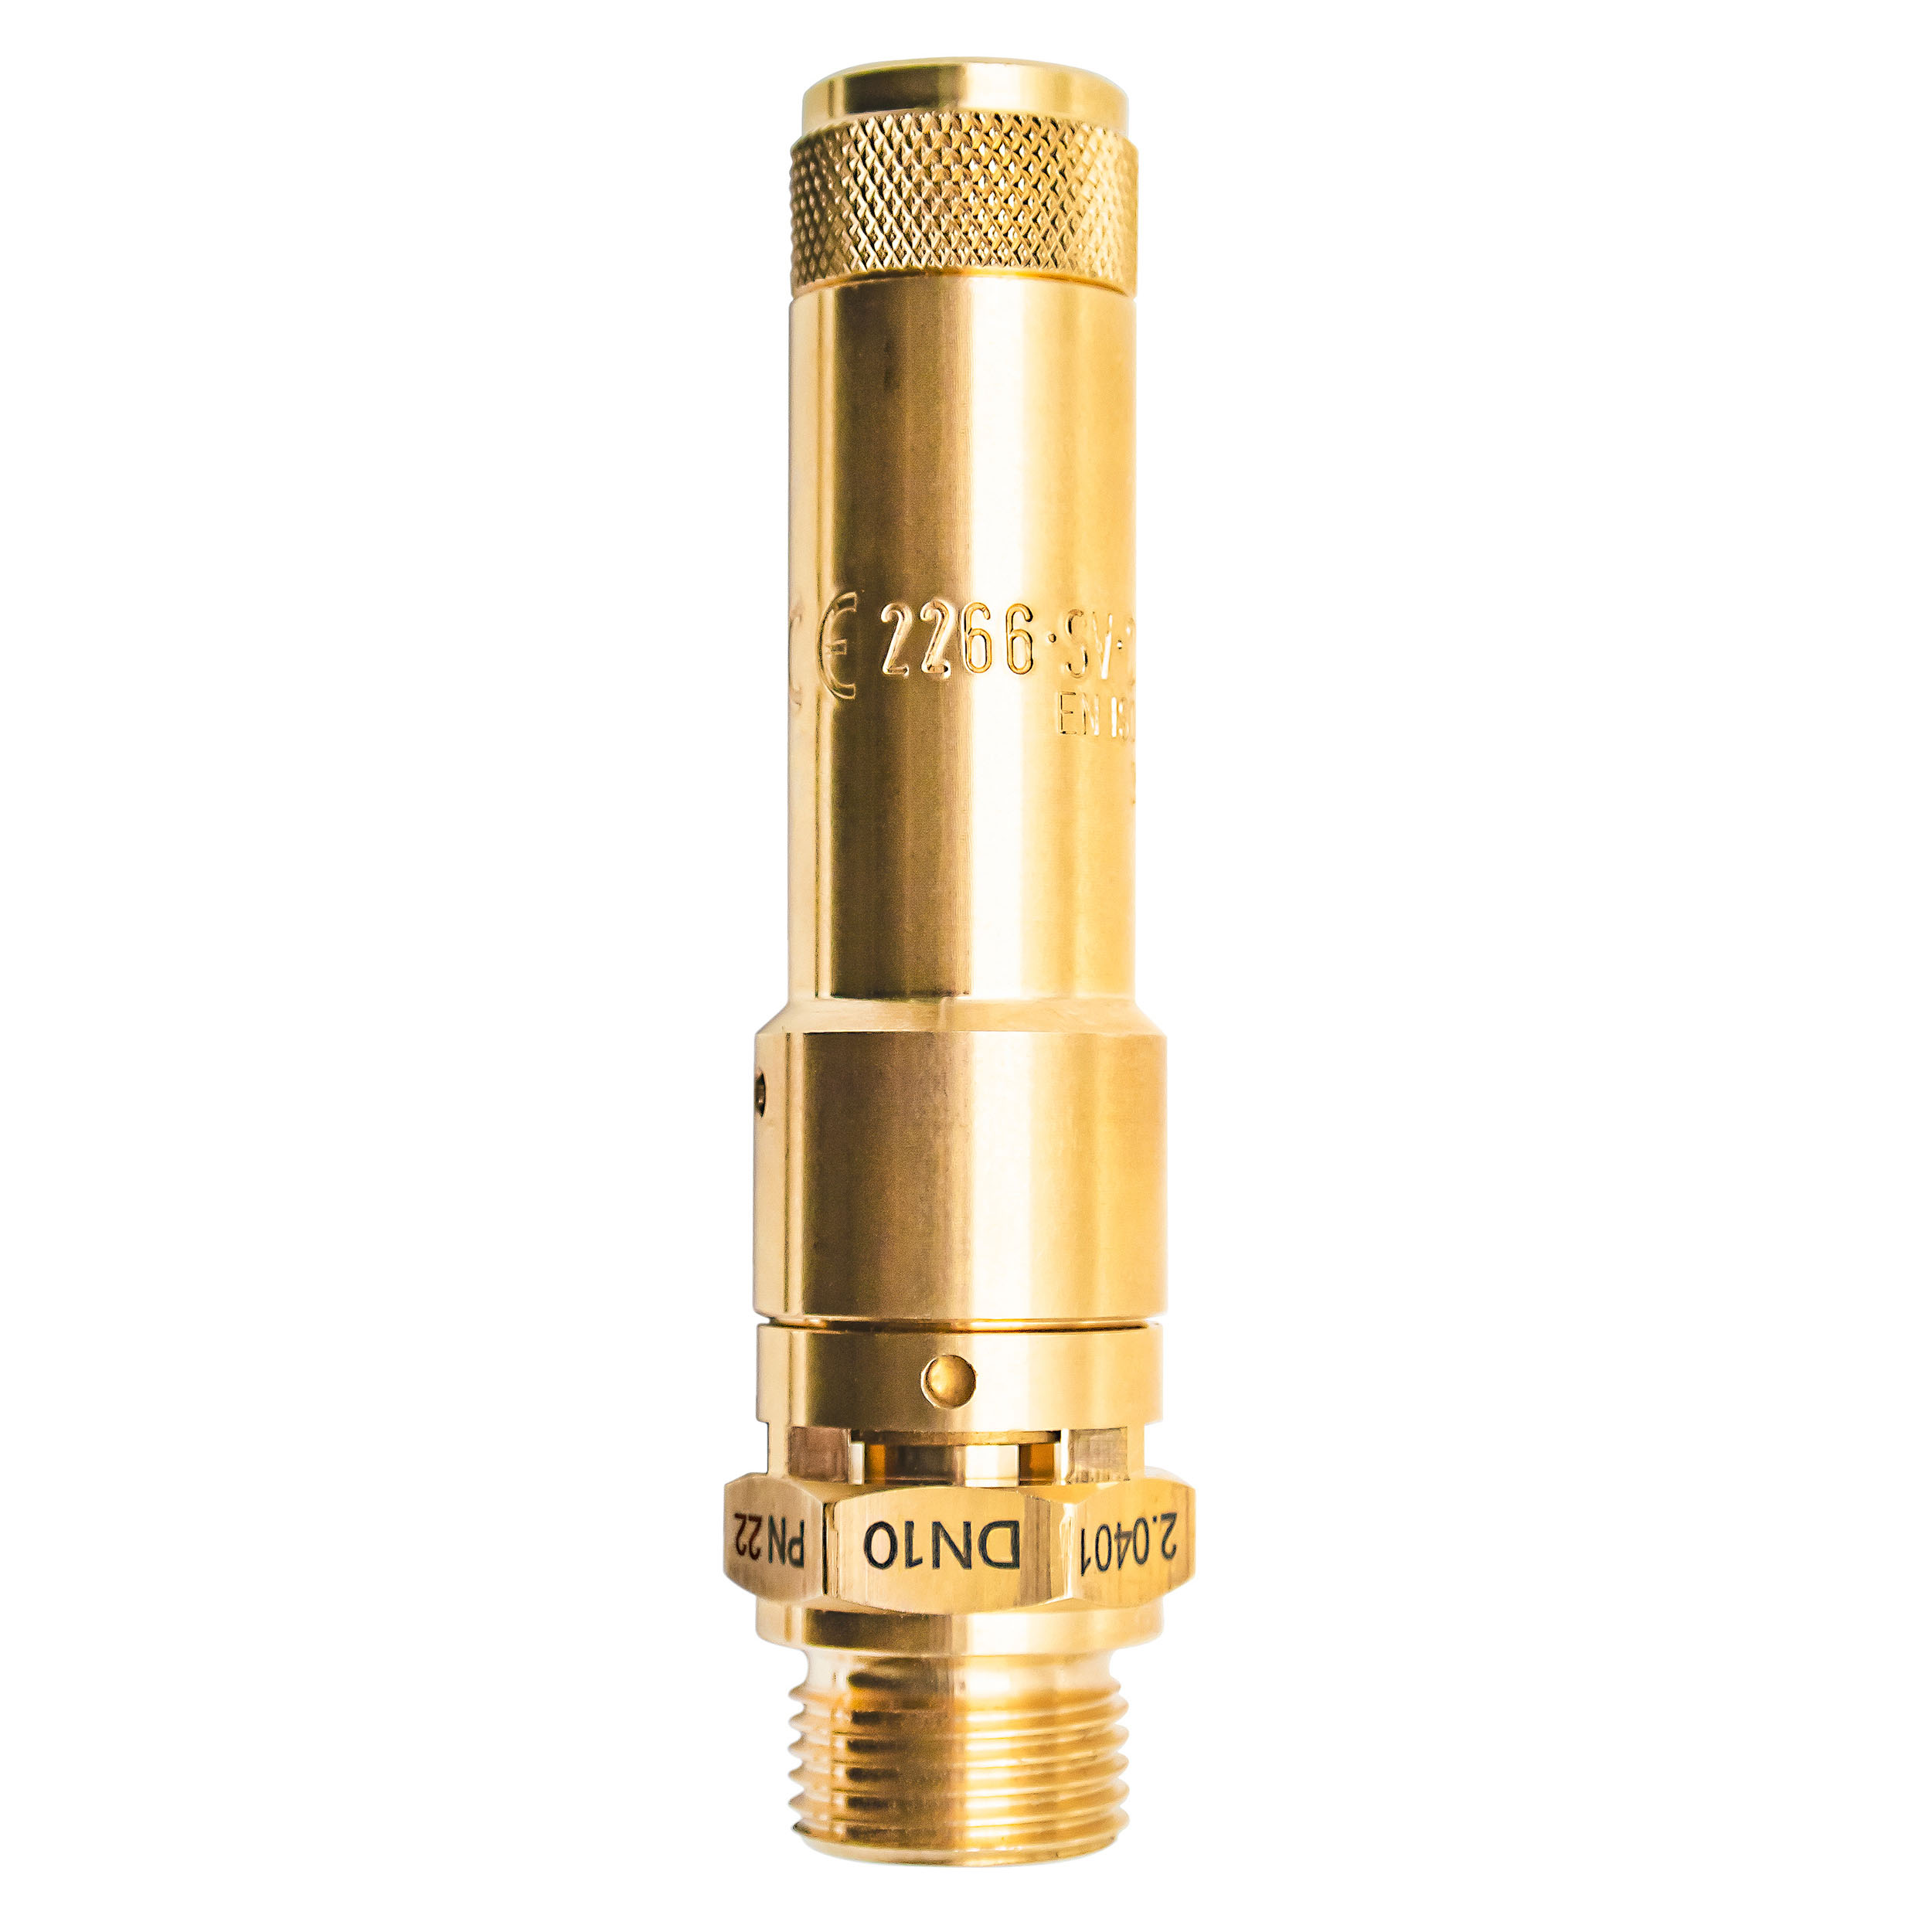 Savety valve component tested DN 10, G½, set pressure: 9.7 bar (140,65 psi)